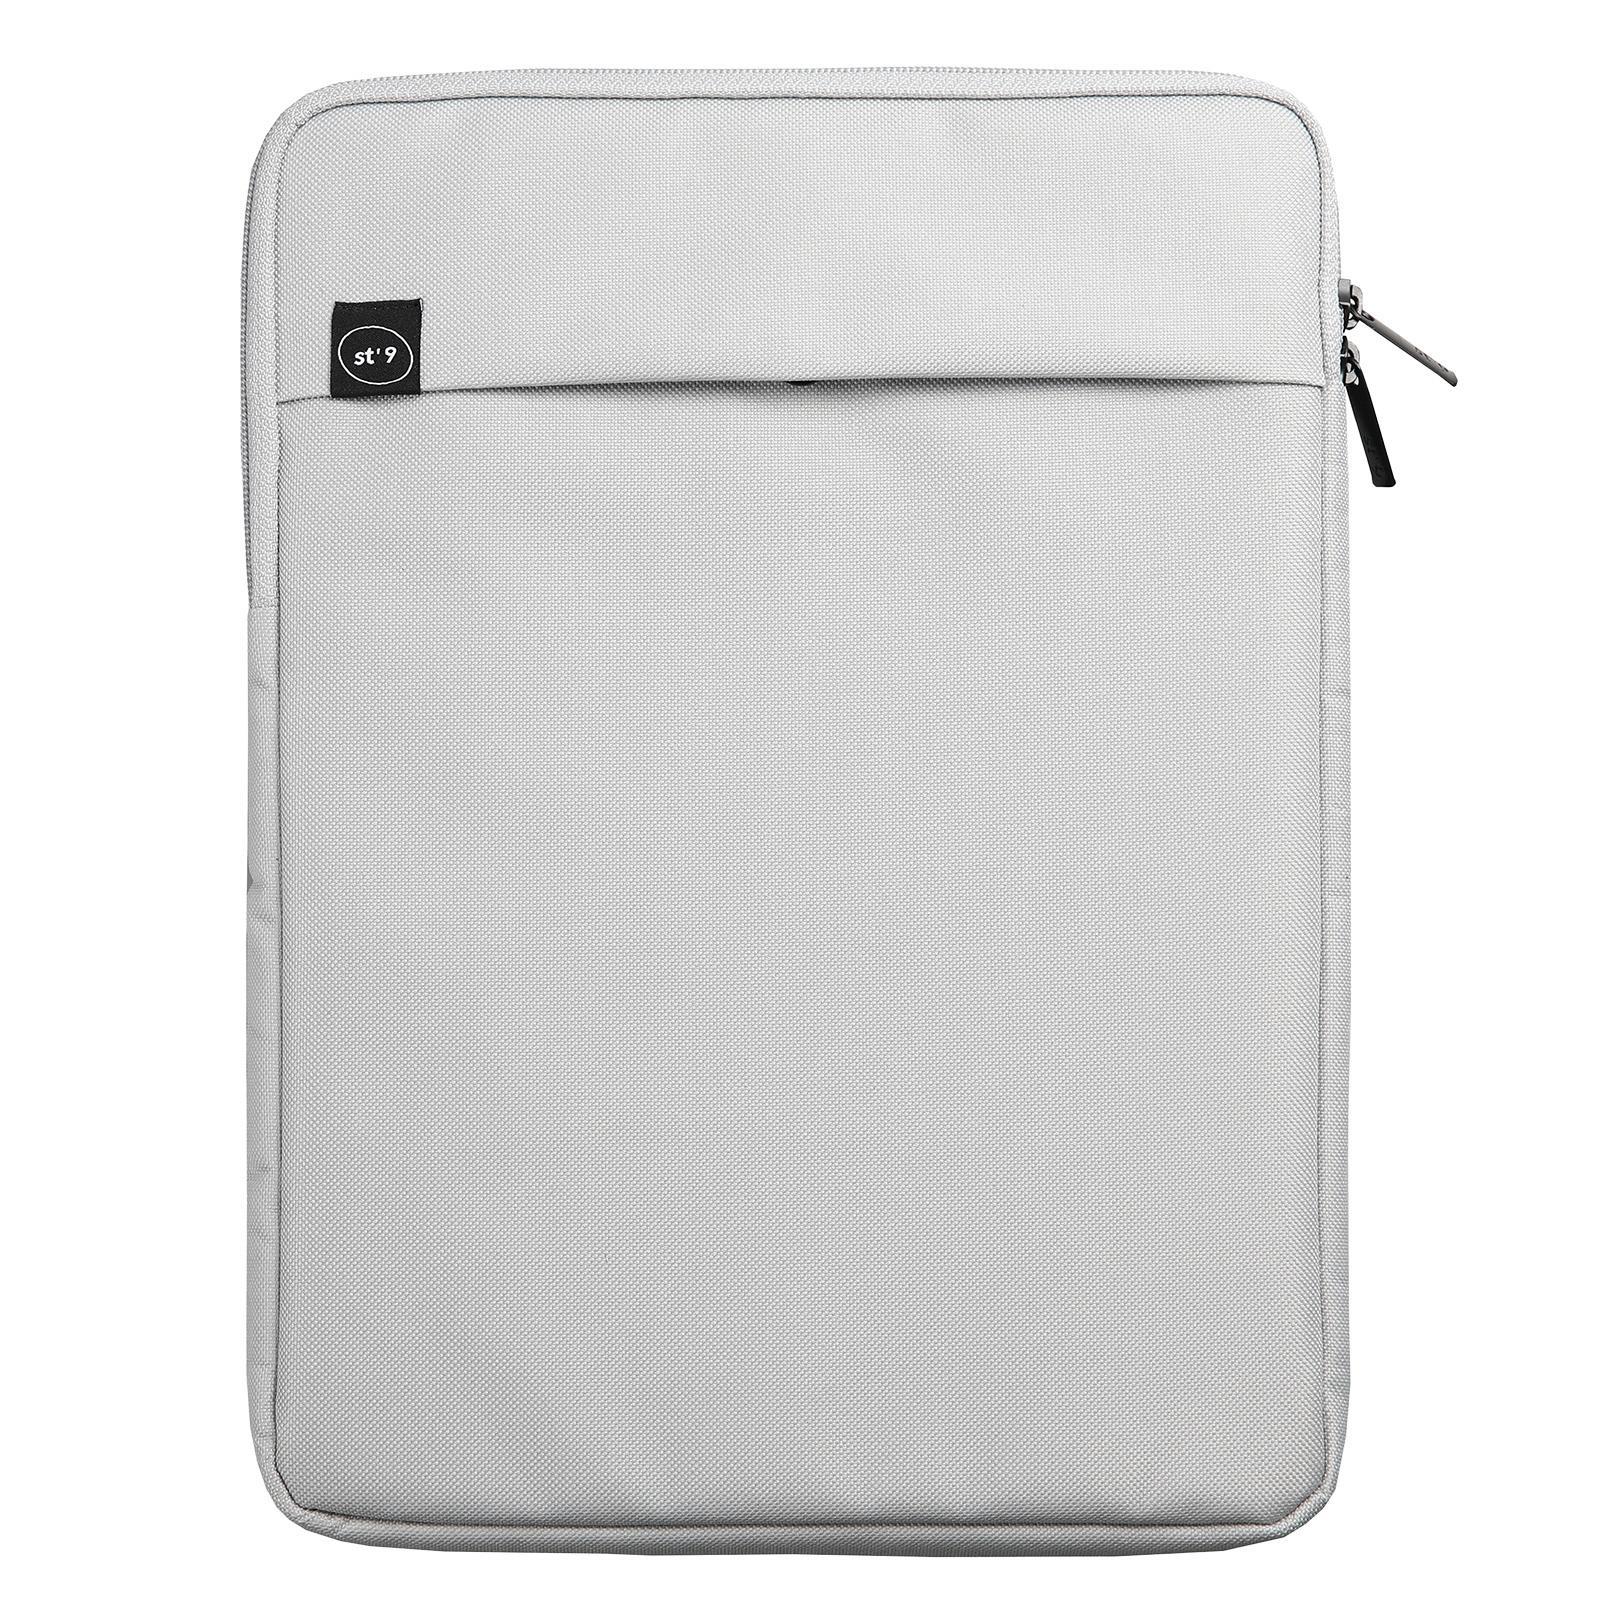 ST'9 XL size 15.6/16 inch Grey Laptop Sleeve Padded Travel Carry Case Bag LUKE